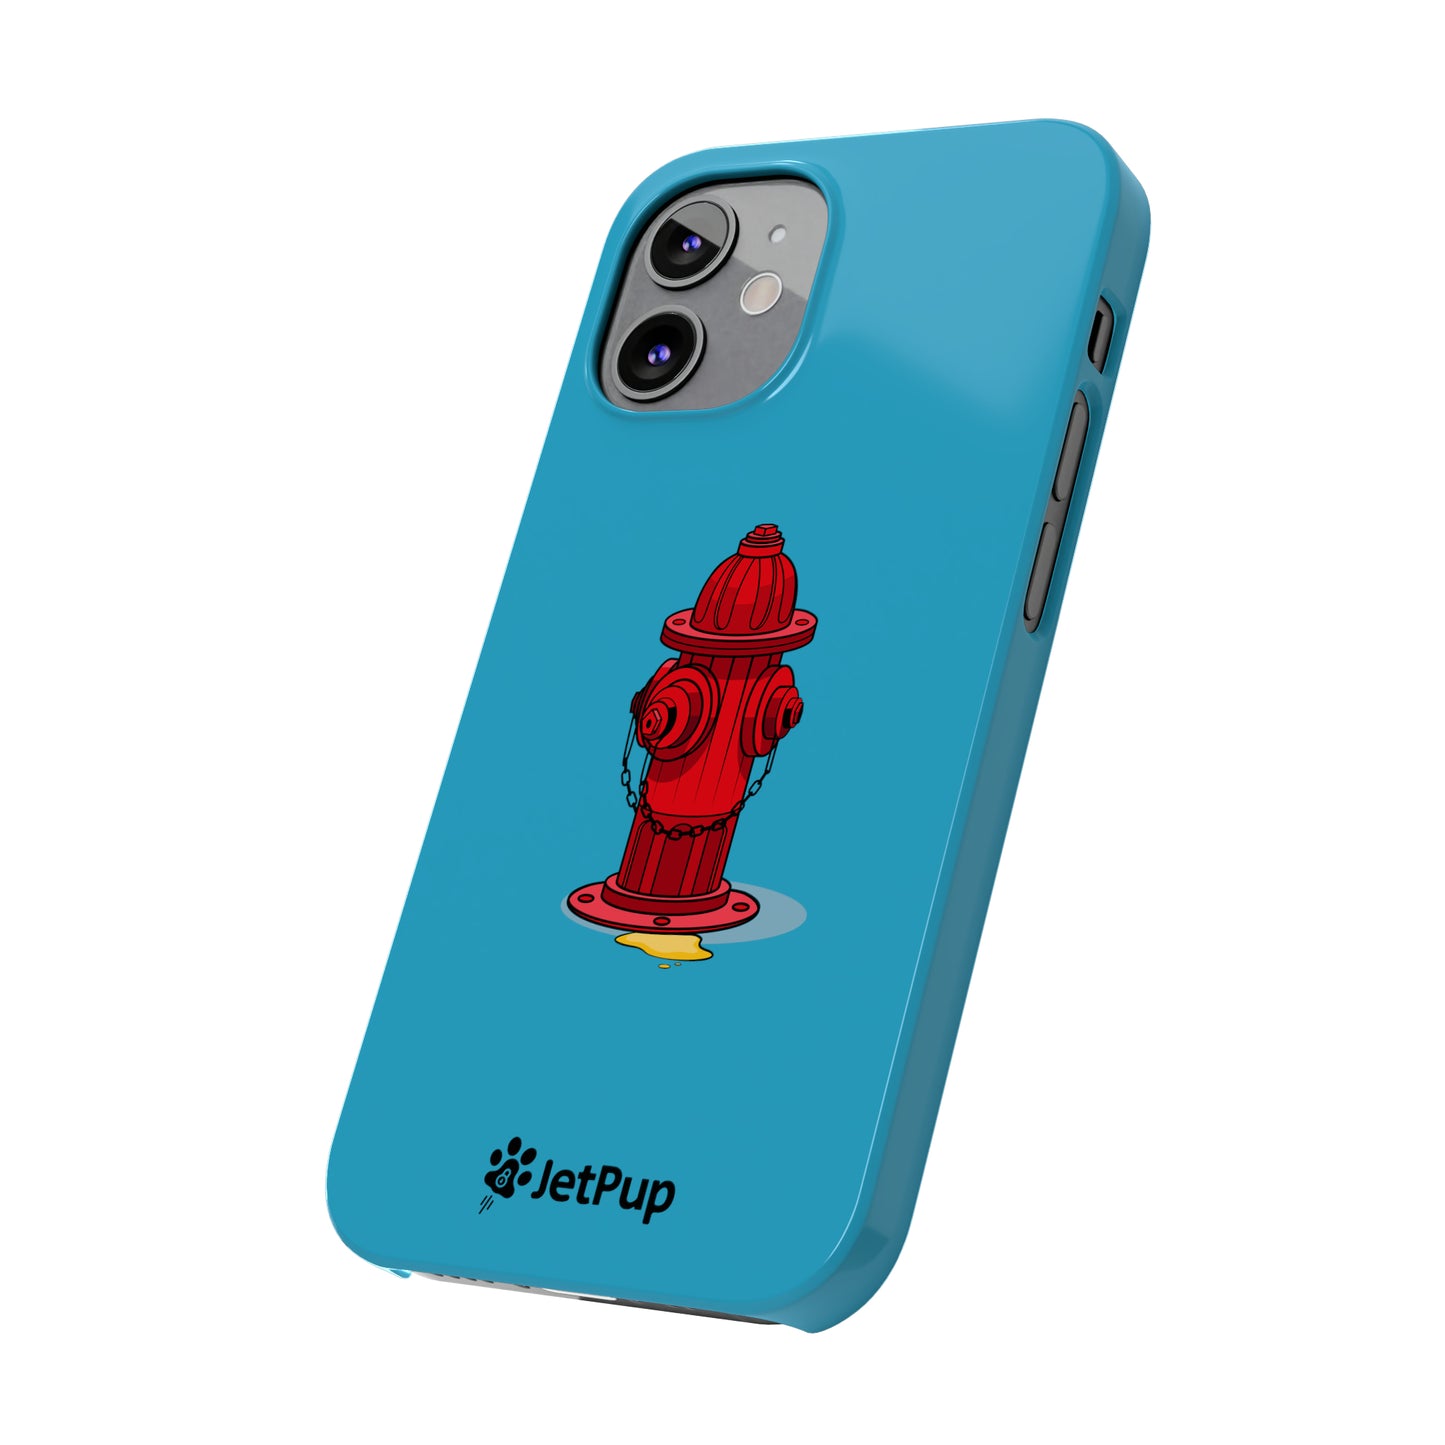 Hydrant Slim iPhone Cases - Turquoise